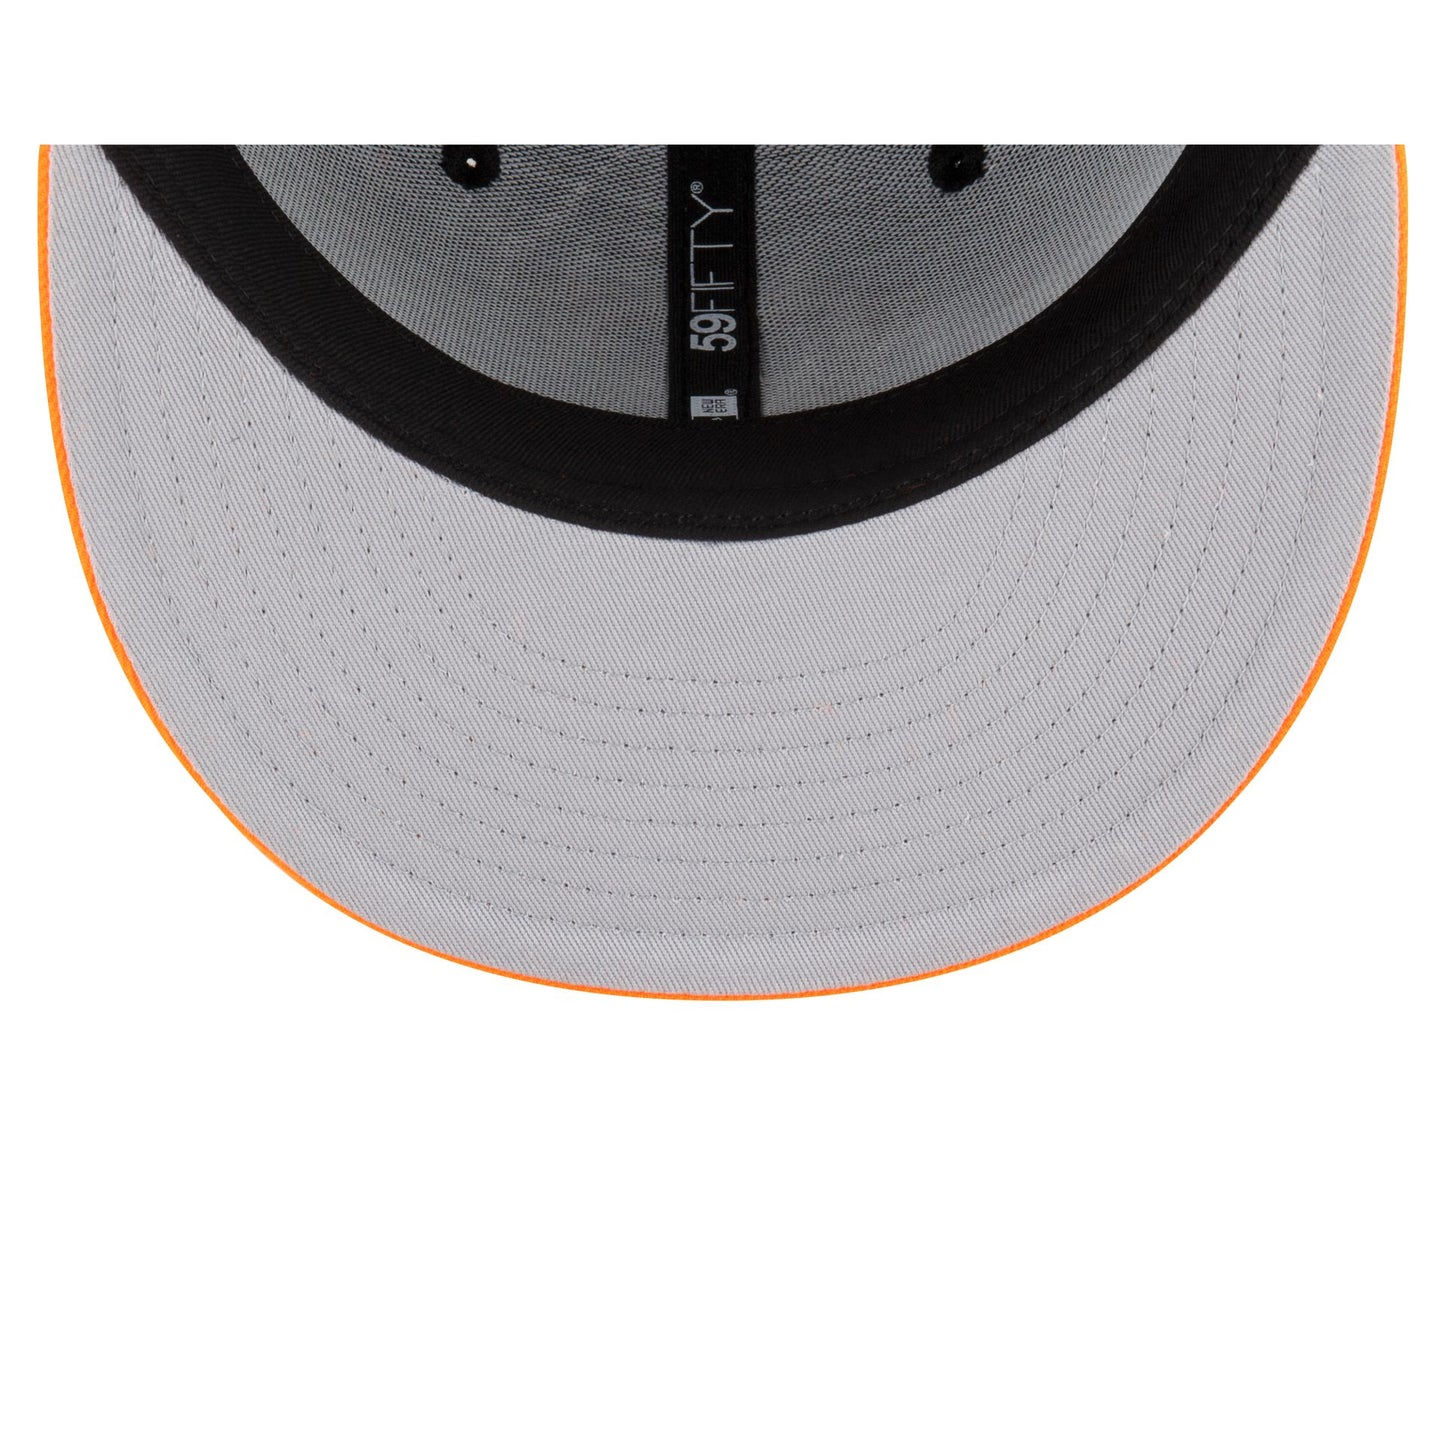 Just Caps Orange Visor New 59FIFTY New – Era Yankees Cap Hat Fitted York